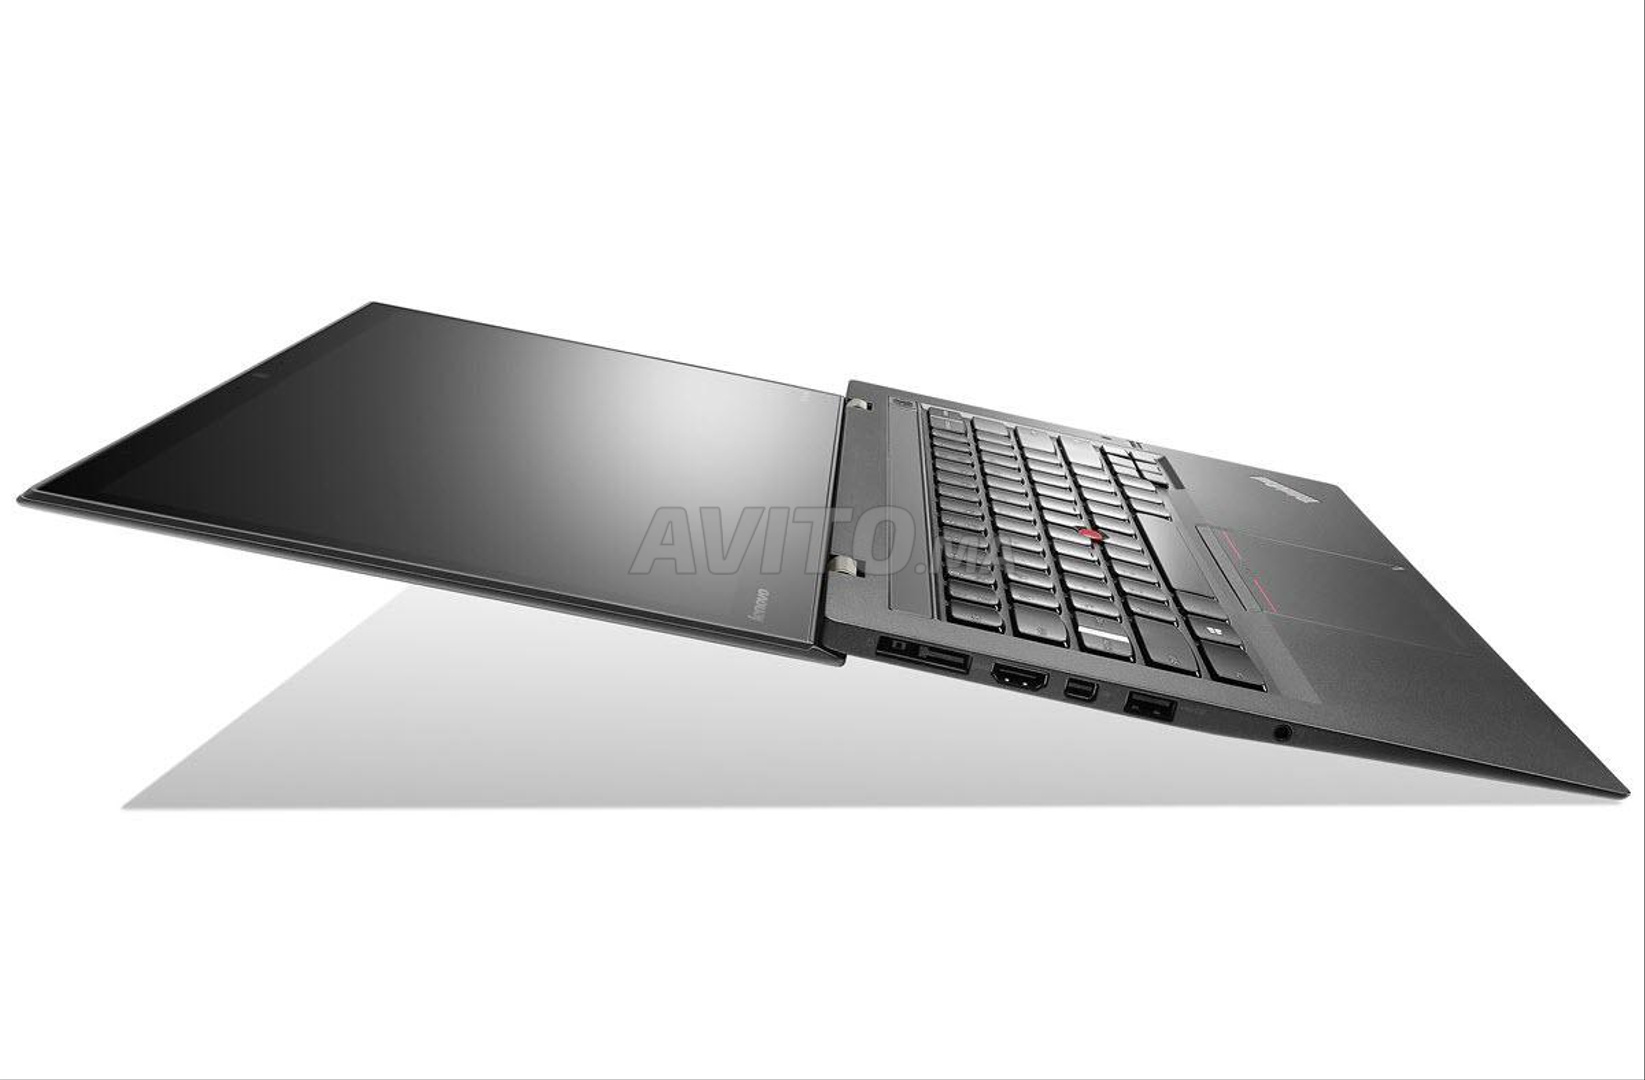 Lenovo ThinkPad X1 Carbon i5 Gen 3 SSD 128GB - 2